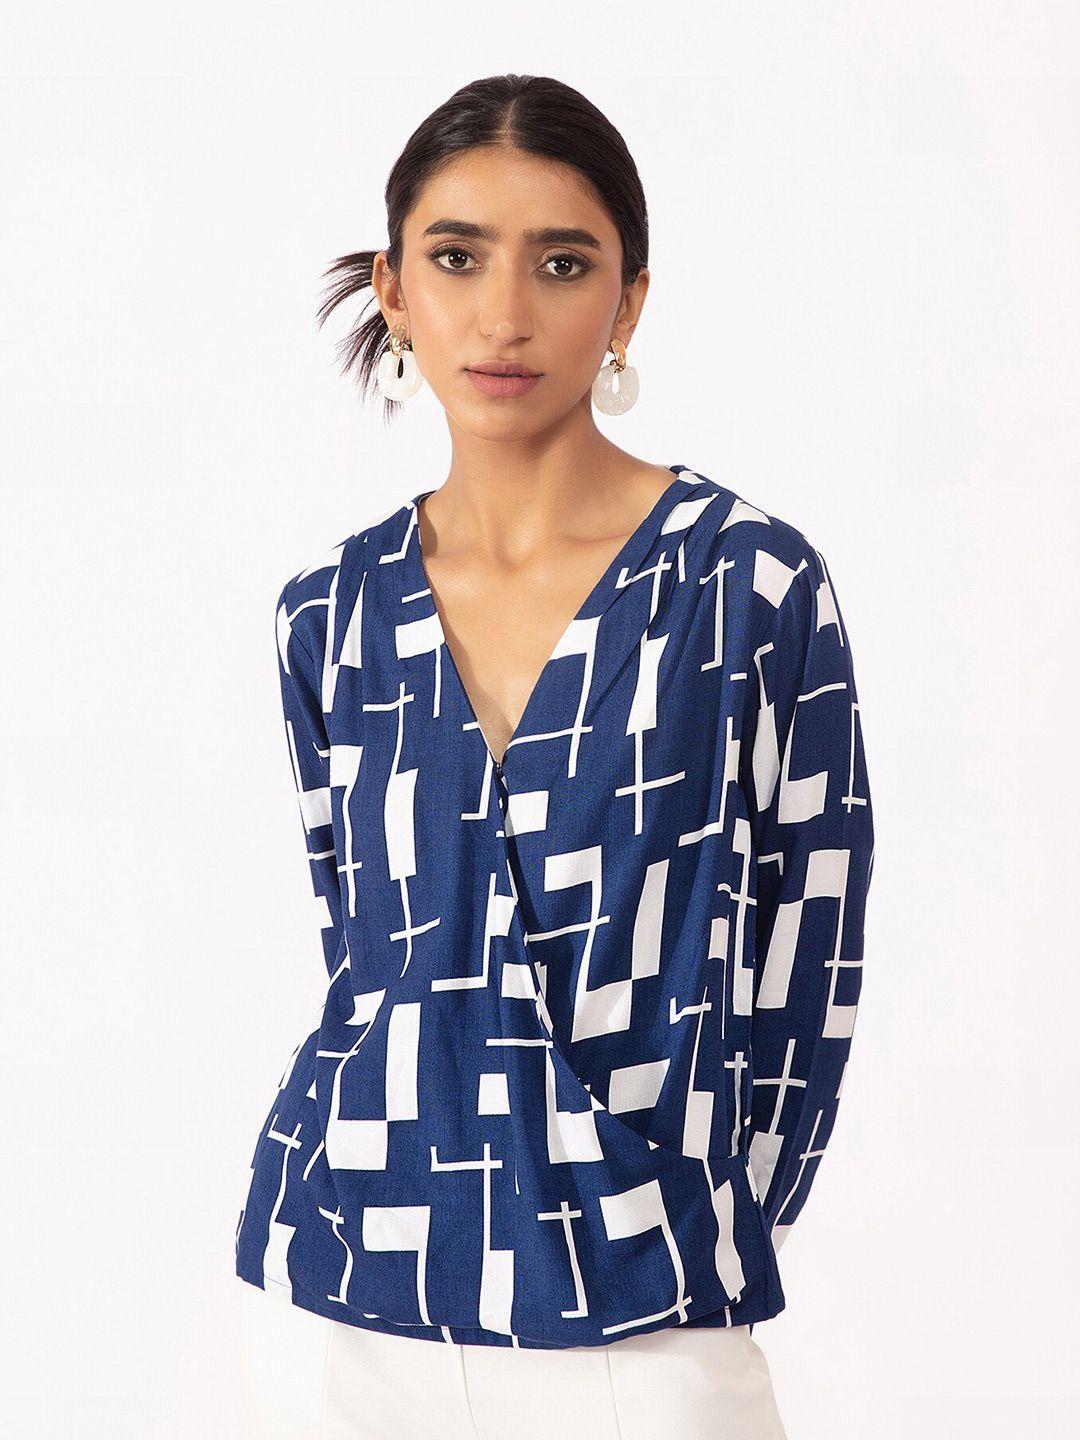 20dresses blue & white geometric print wrap top